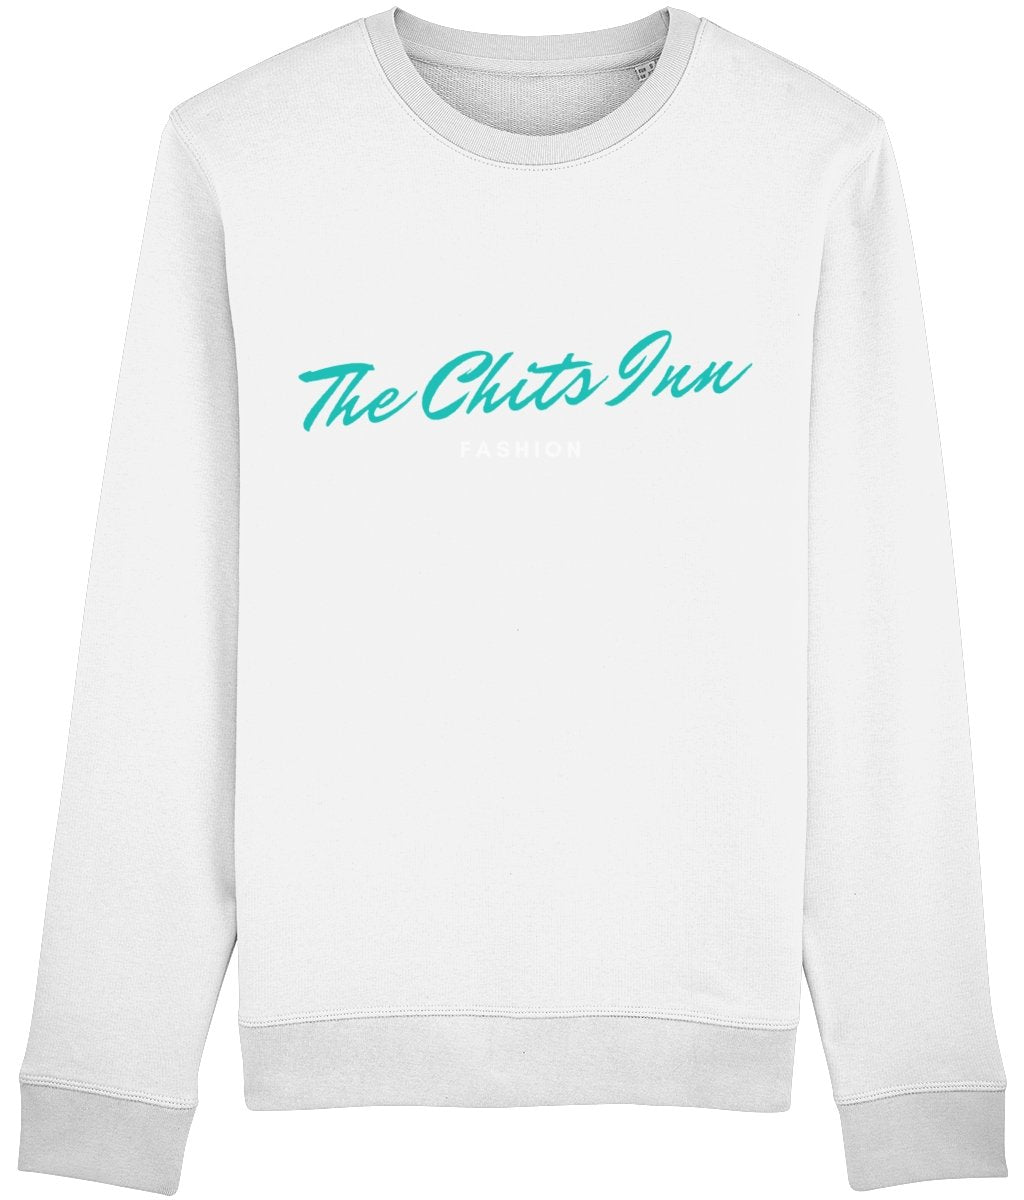 Rise of The Chits Inn Fashion - The Chits Inn